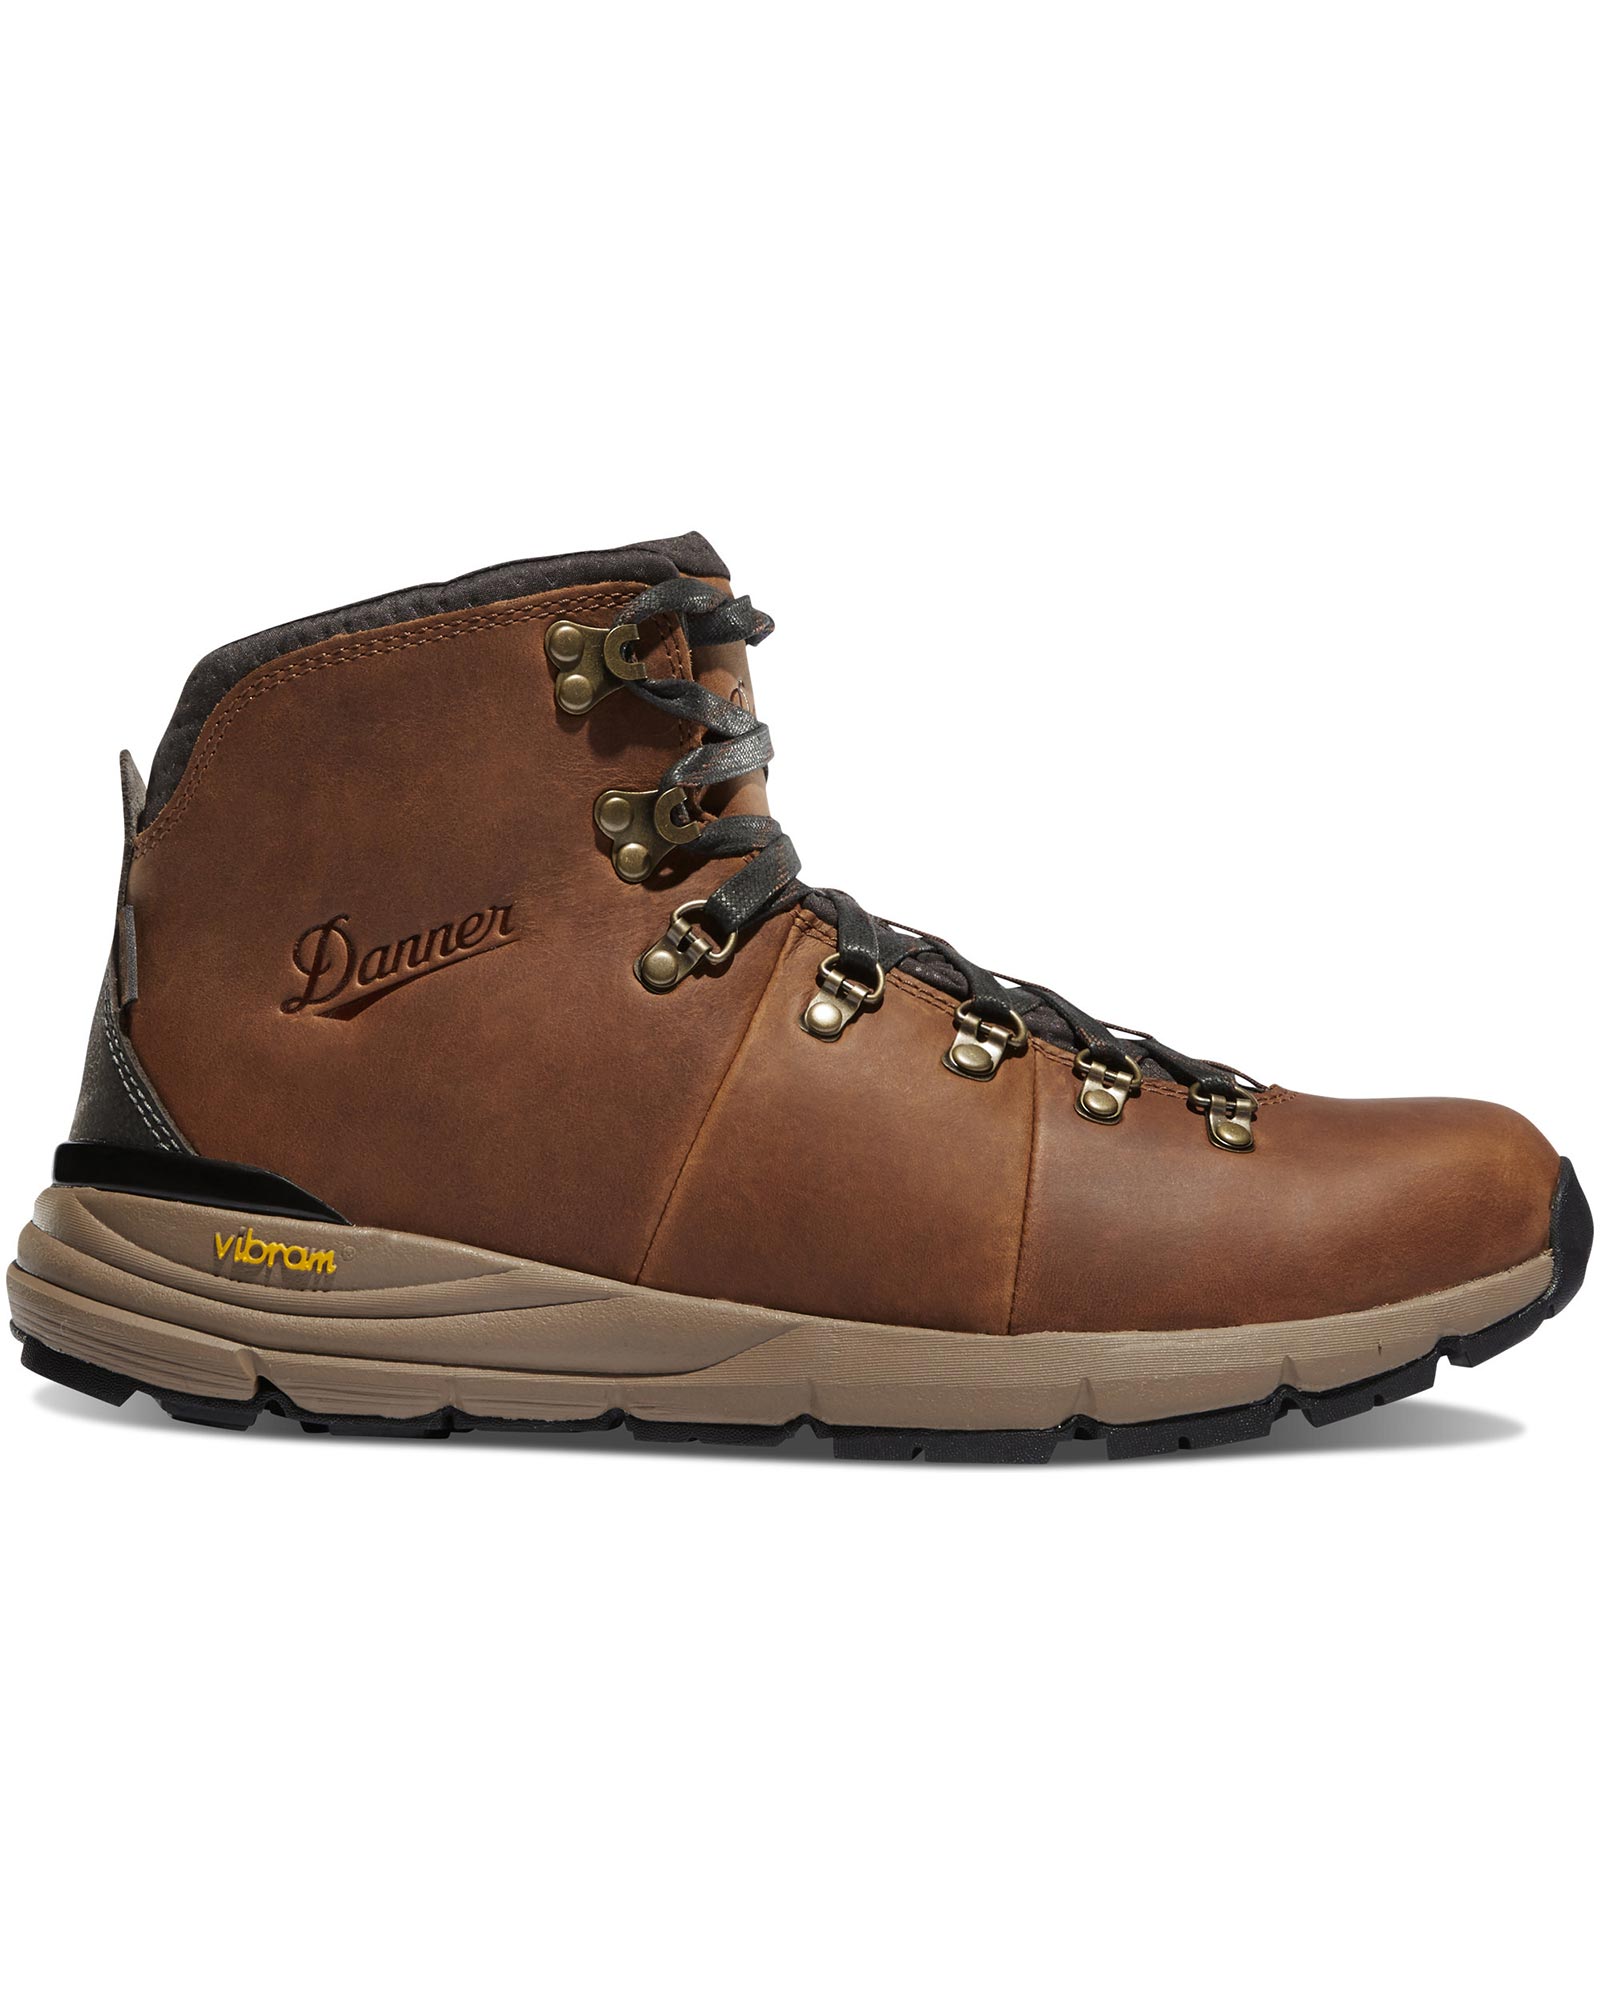 Danner Men’s Mountain 600 4.5" Boots - Rich Brown UK 8